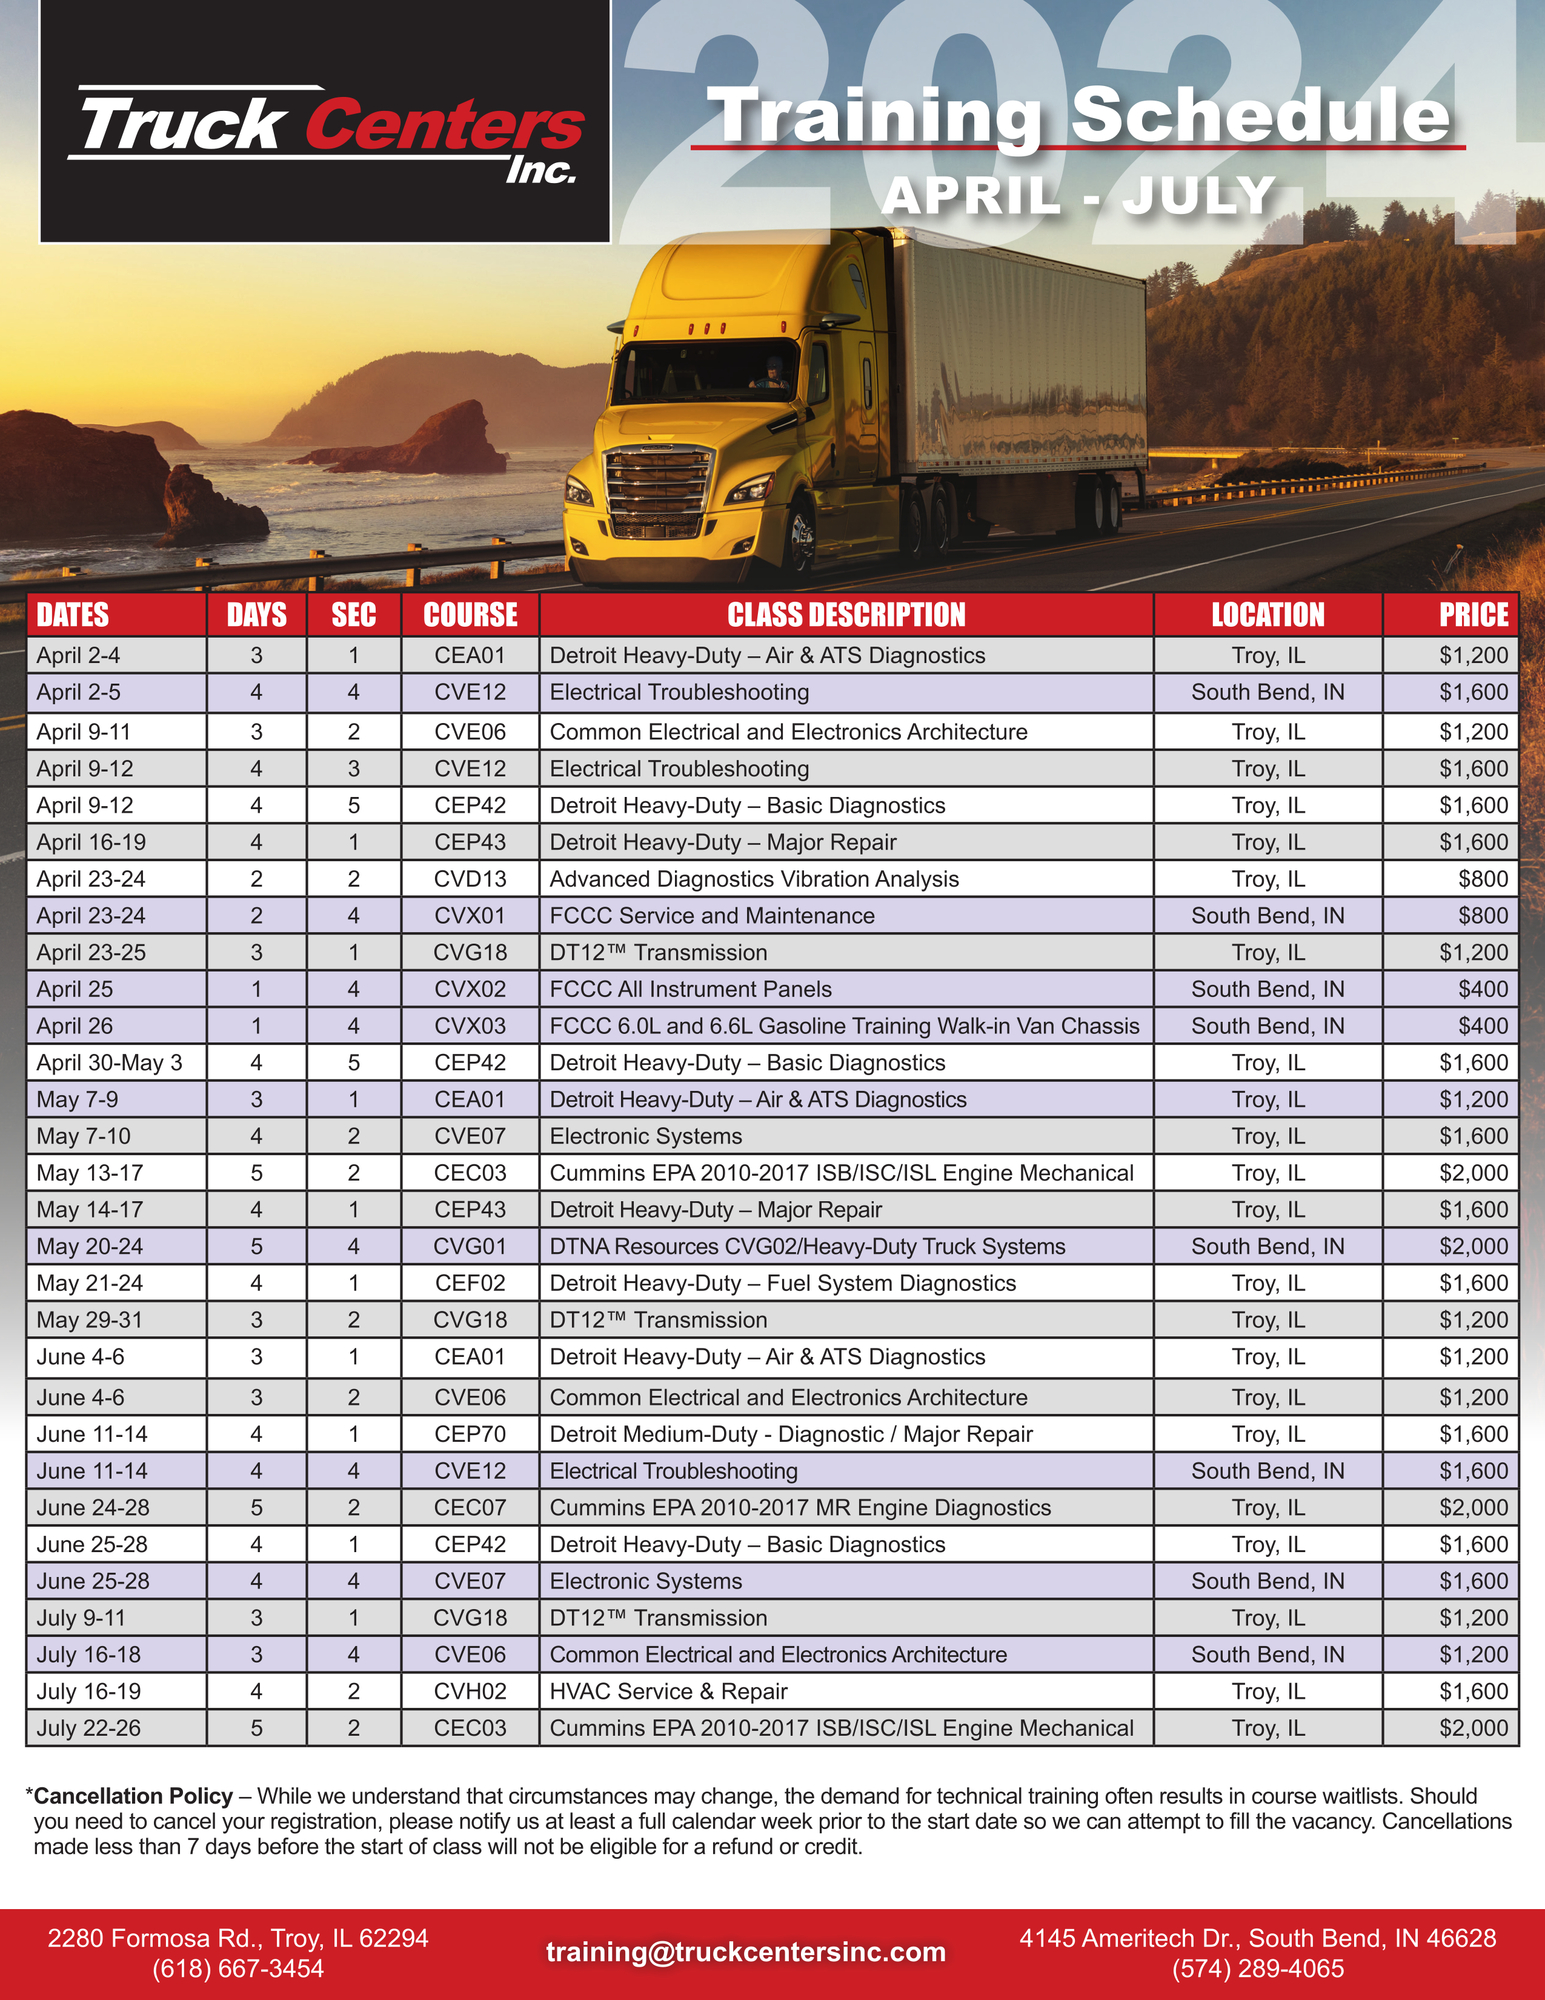 Go to truckcentersinc.com (Q2_Training_Schedule_Apr_Jul subpage)